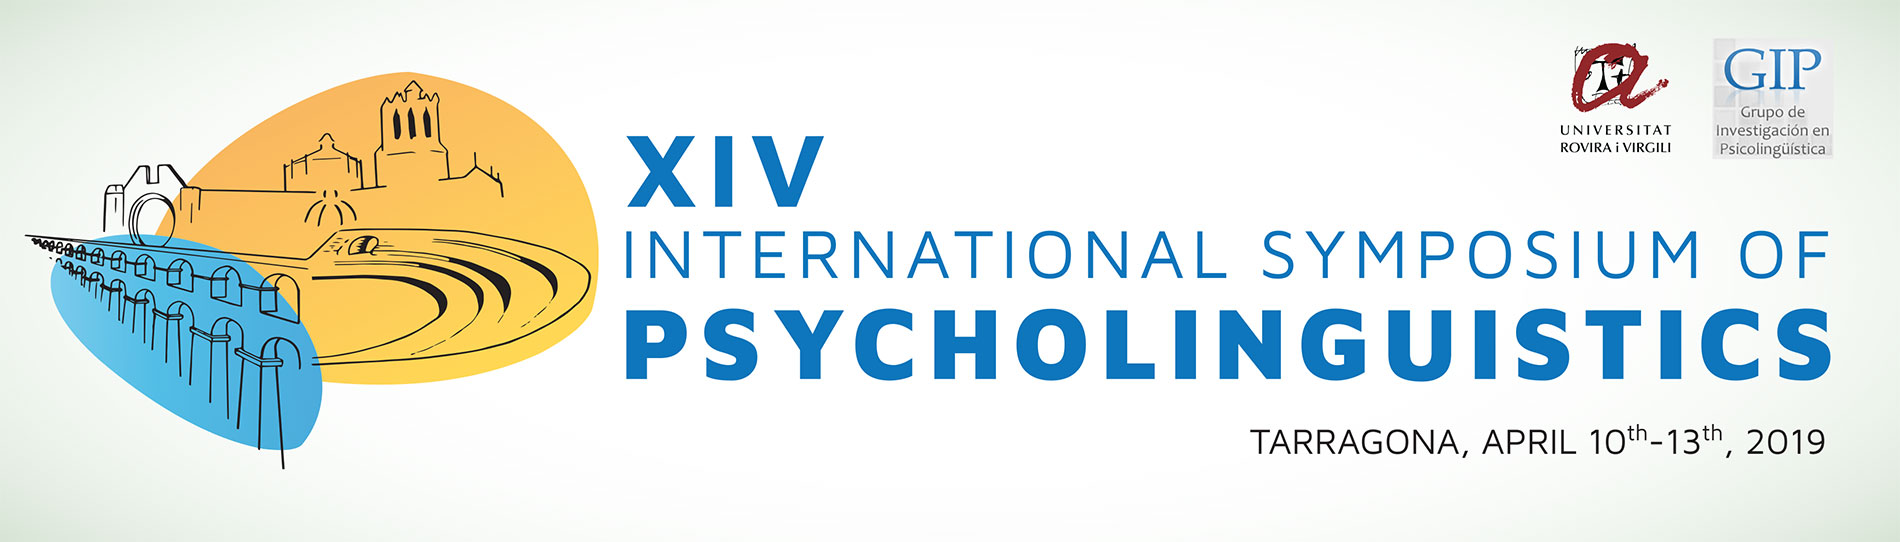 XIV International Symposium of Psycholinguistics